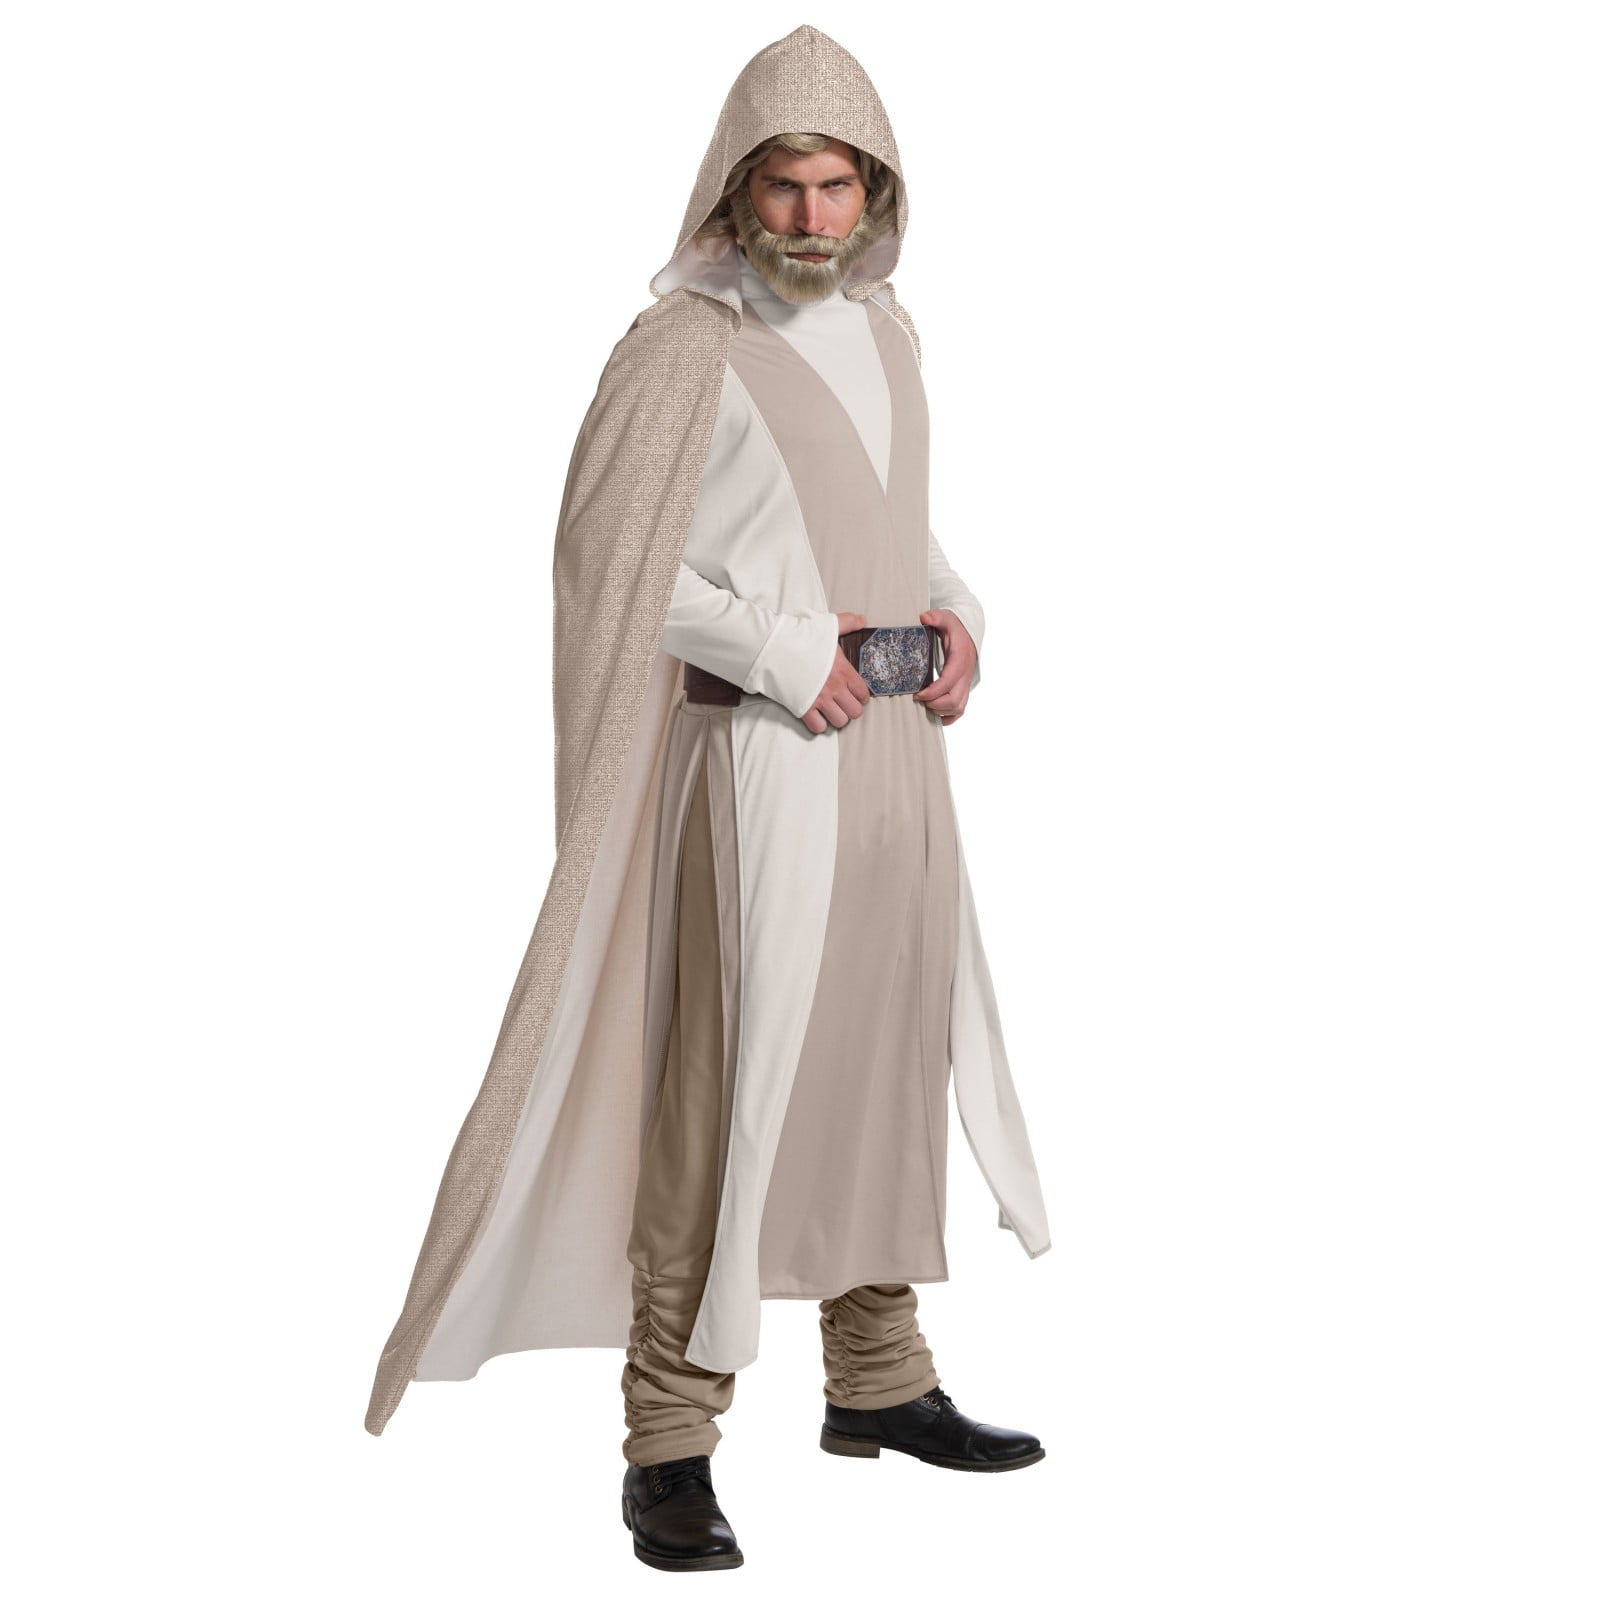 Luke Skywalker Star Wars 8 The Last Jedi Full Set Cosplay Costume Halloween 